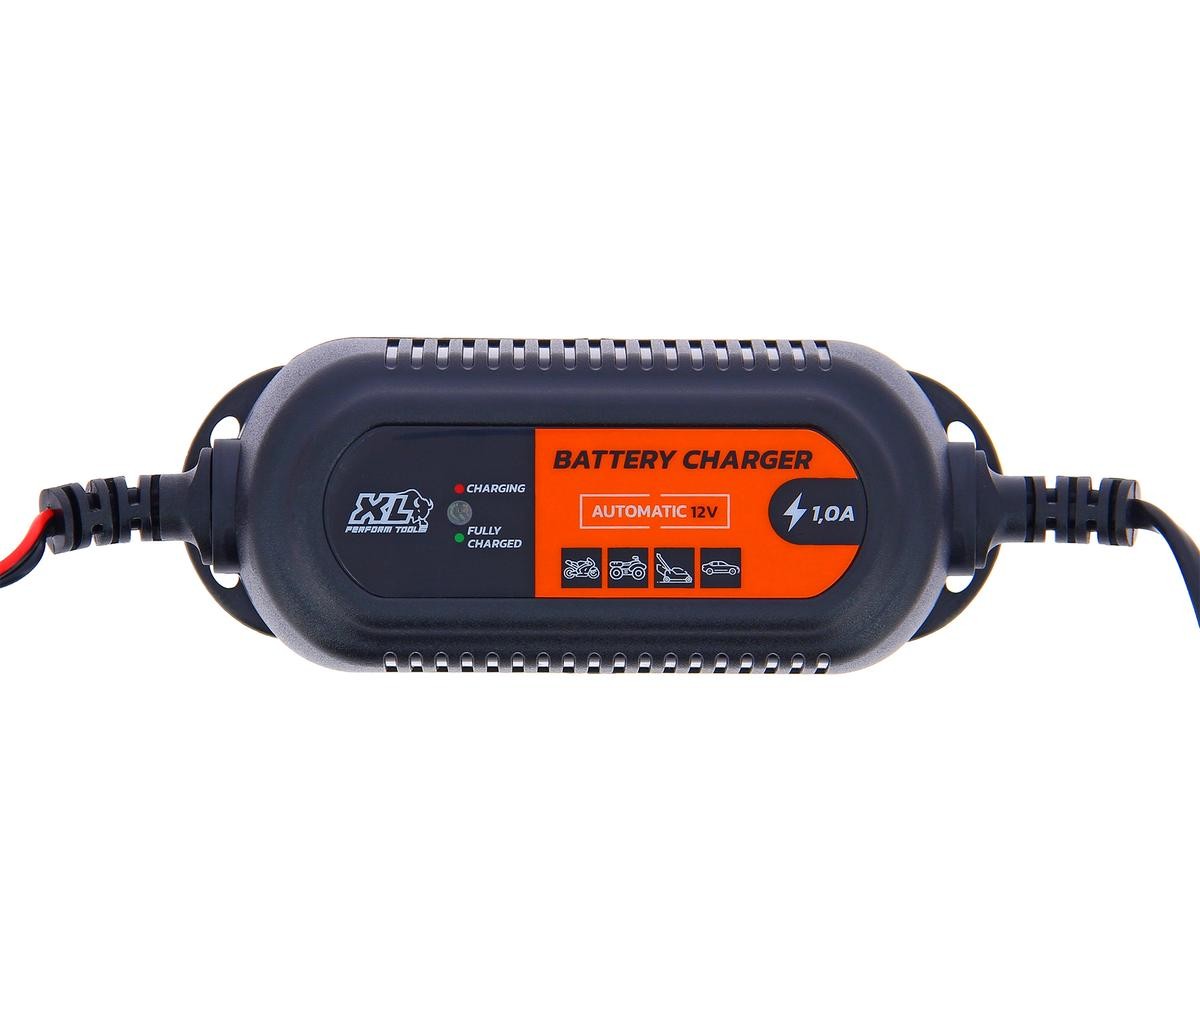 MSW Autobatterie Ladegerät Kfz Pkw Ladegerät Batterie 6 12 24 V 30 A LED  Autobatterie-Ladegerät